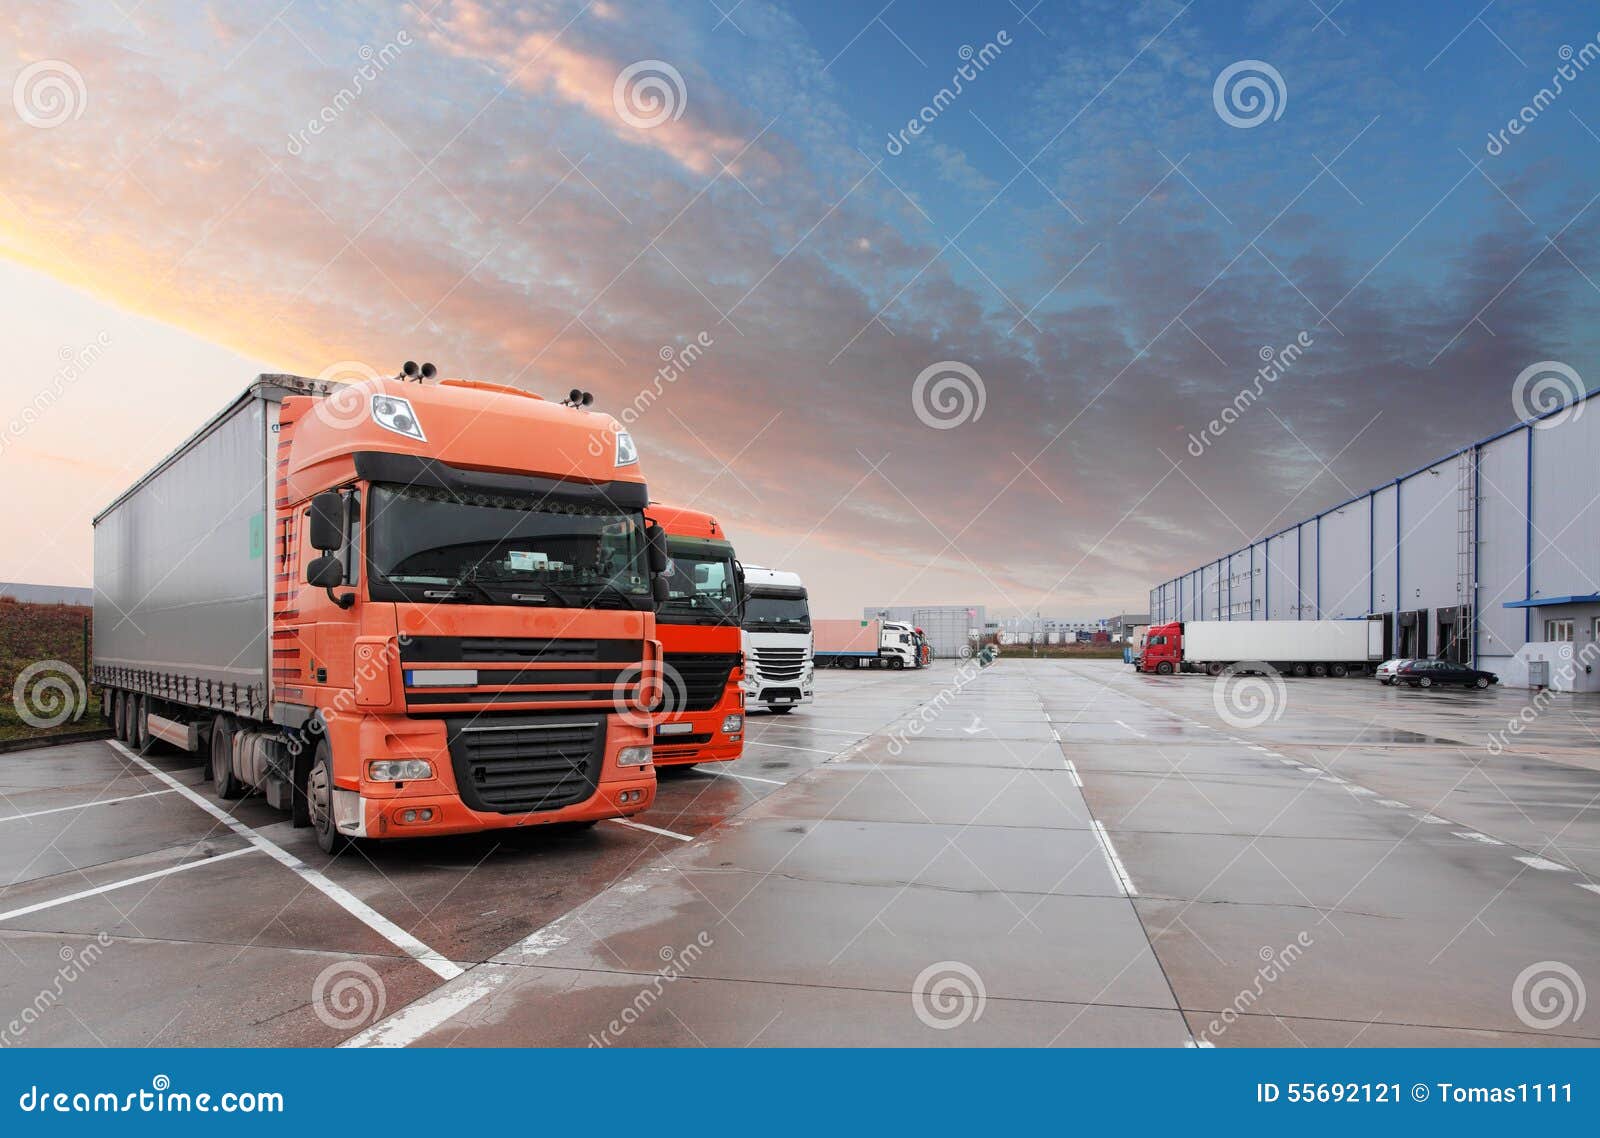 truck in warehouse - cargo transport